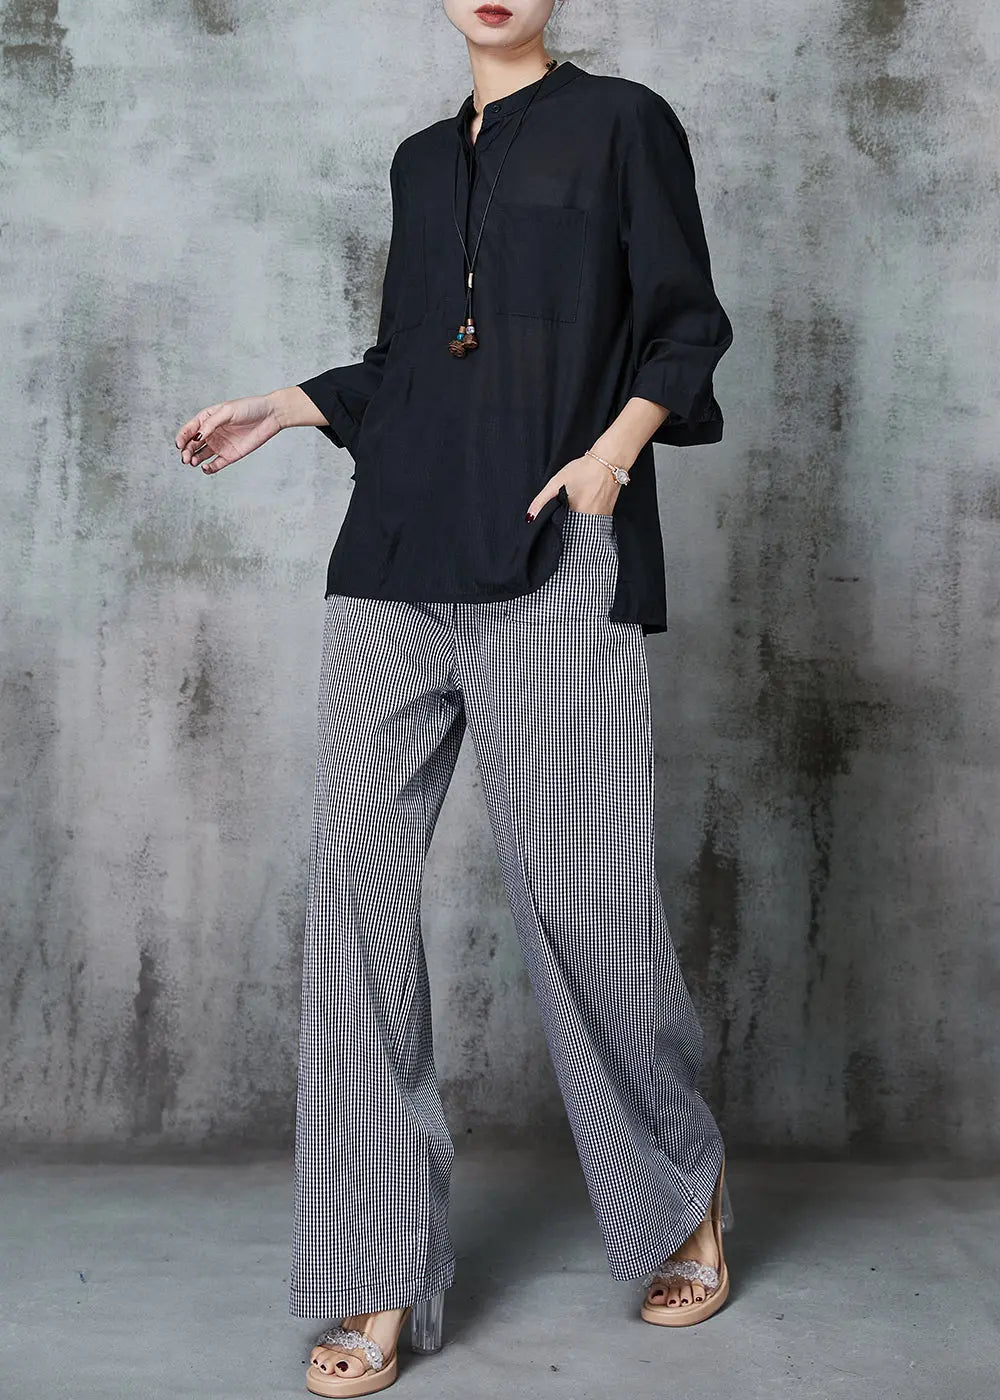 Plus Size Black Oversized Plaid Linen 2 Piece Outfit Spring Ada Fashion